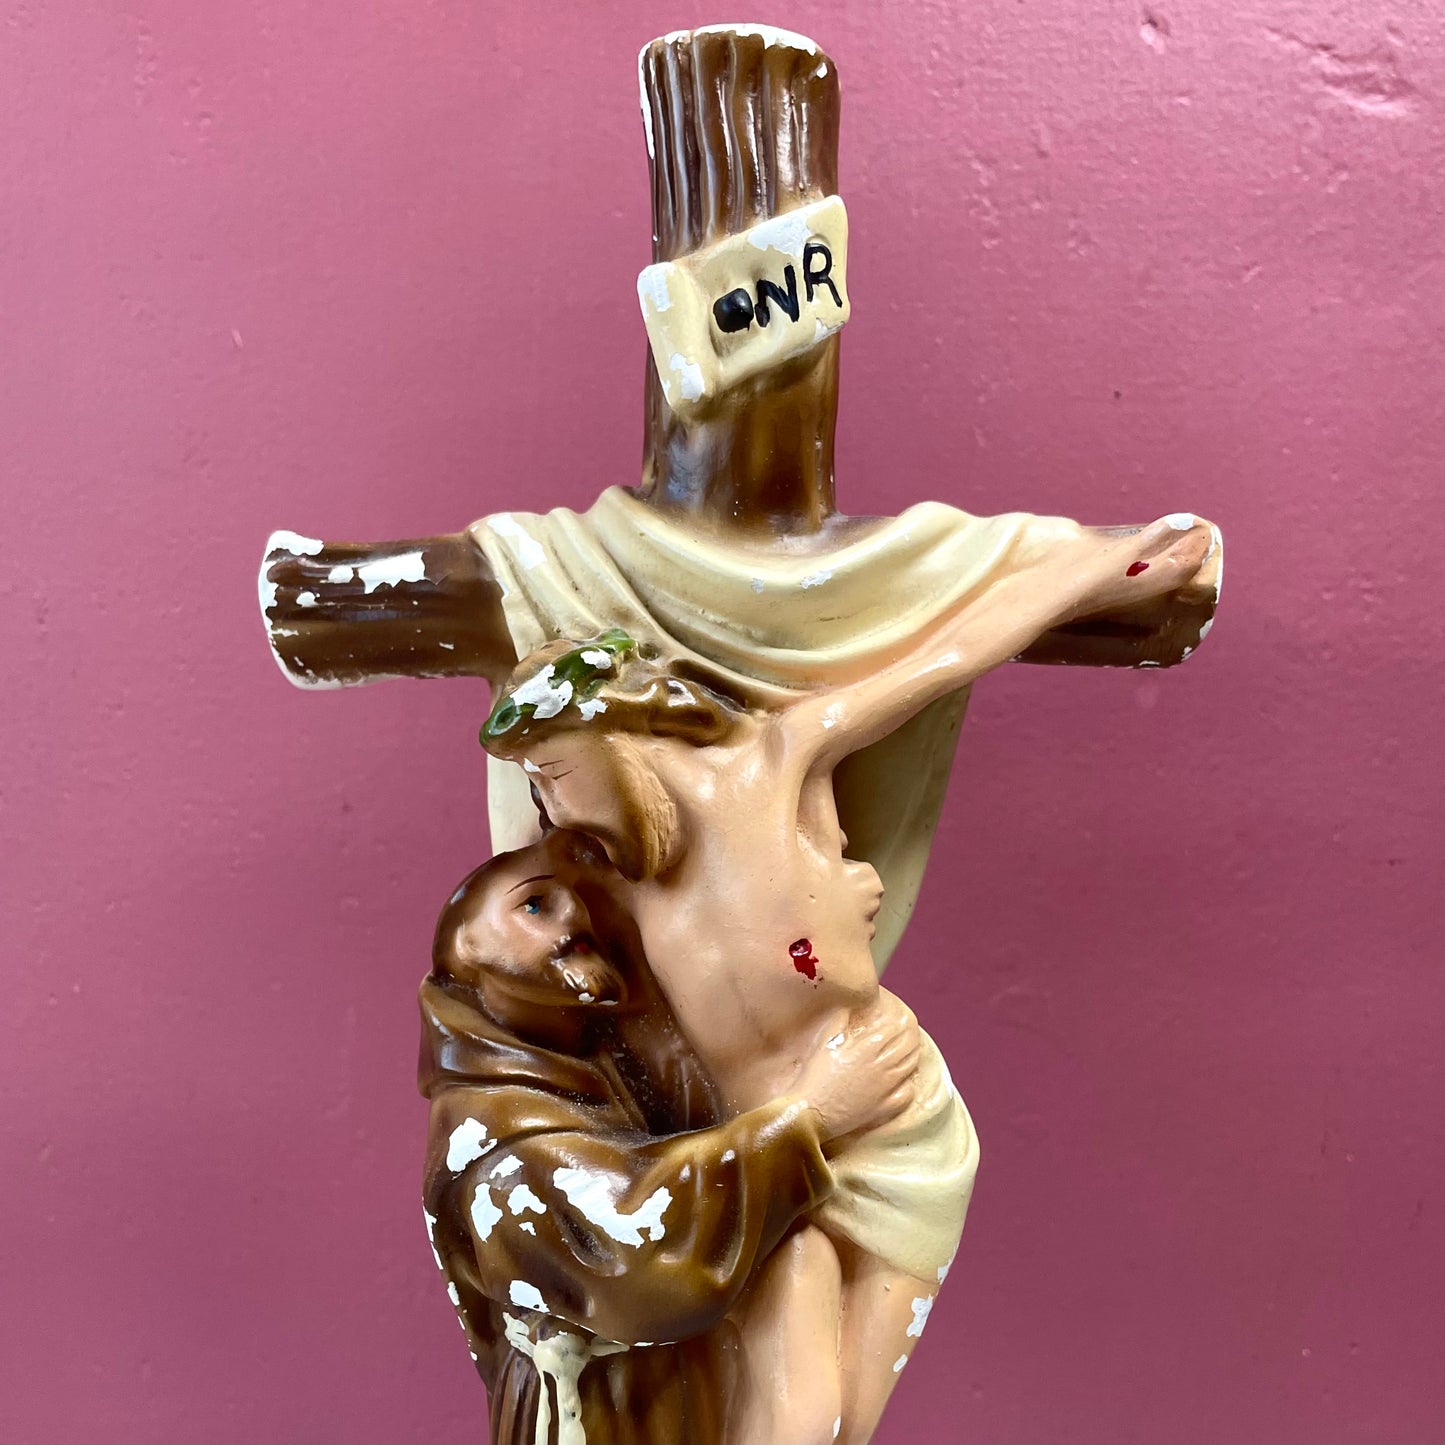 Saint Francis Embracing Christ | Vintage Chalkware Figure